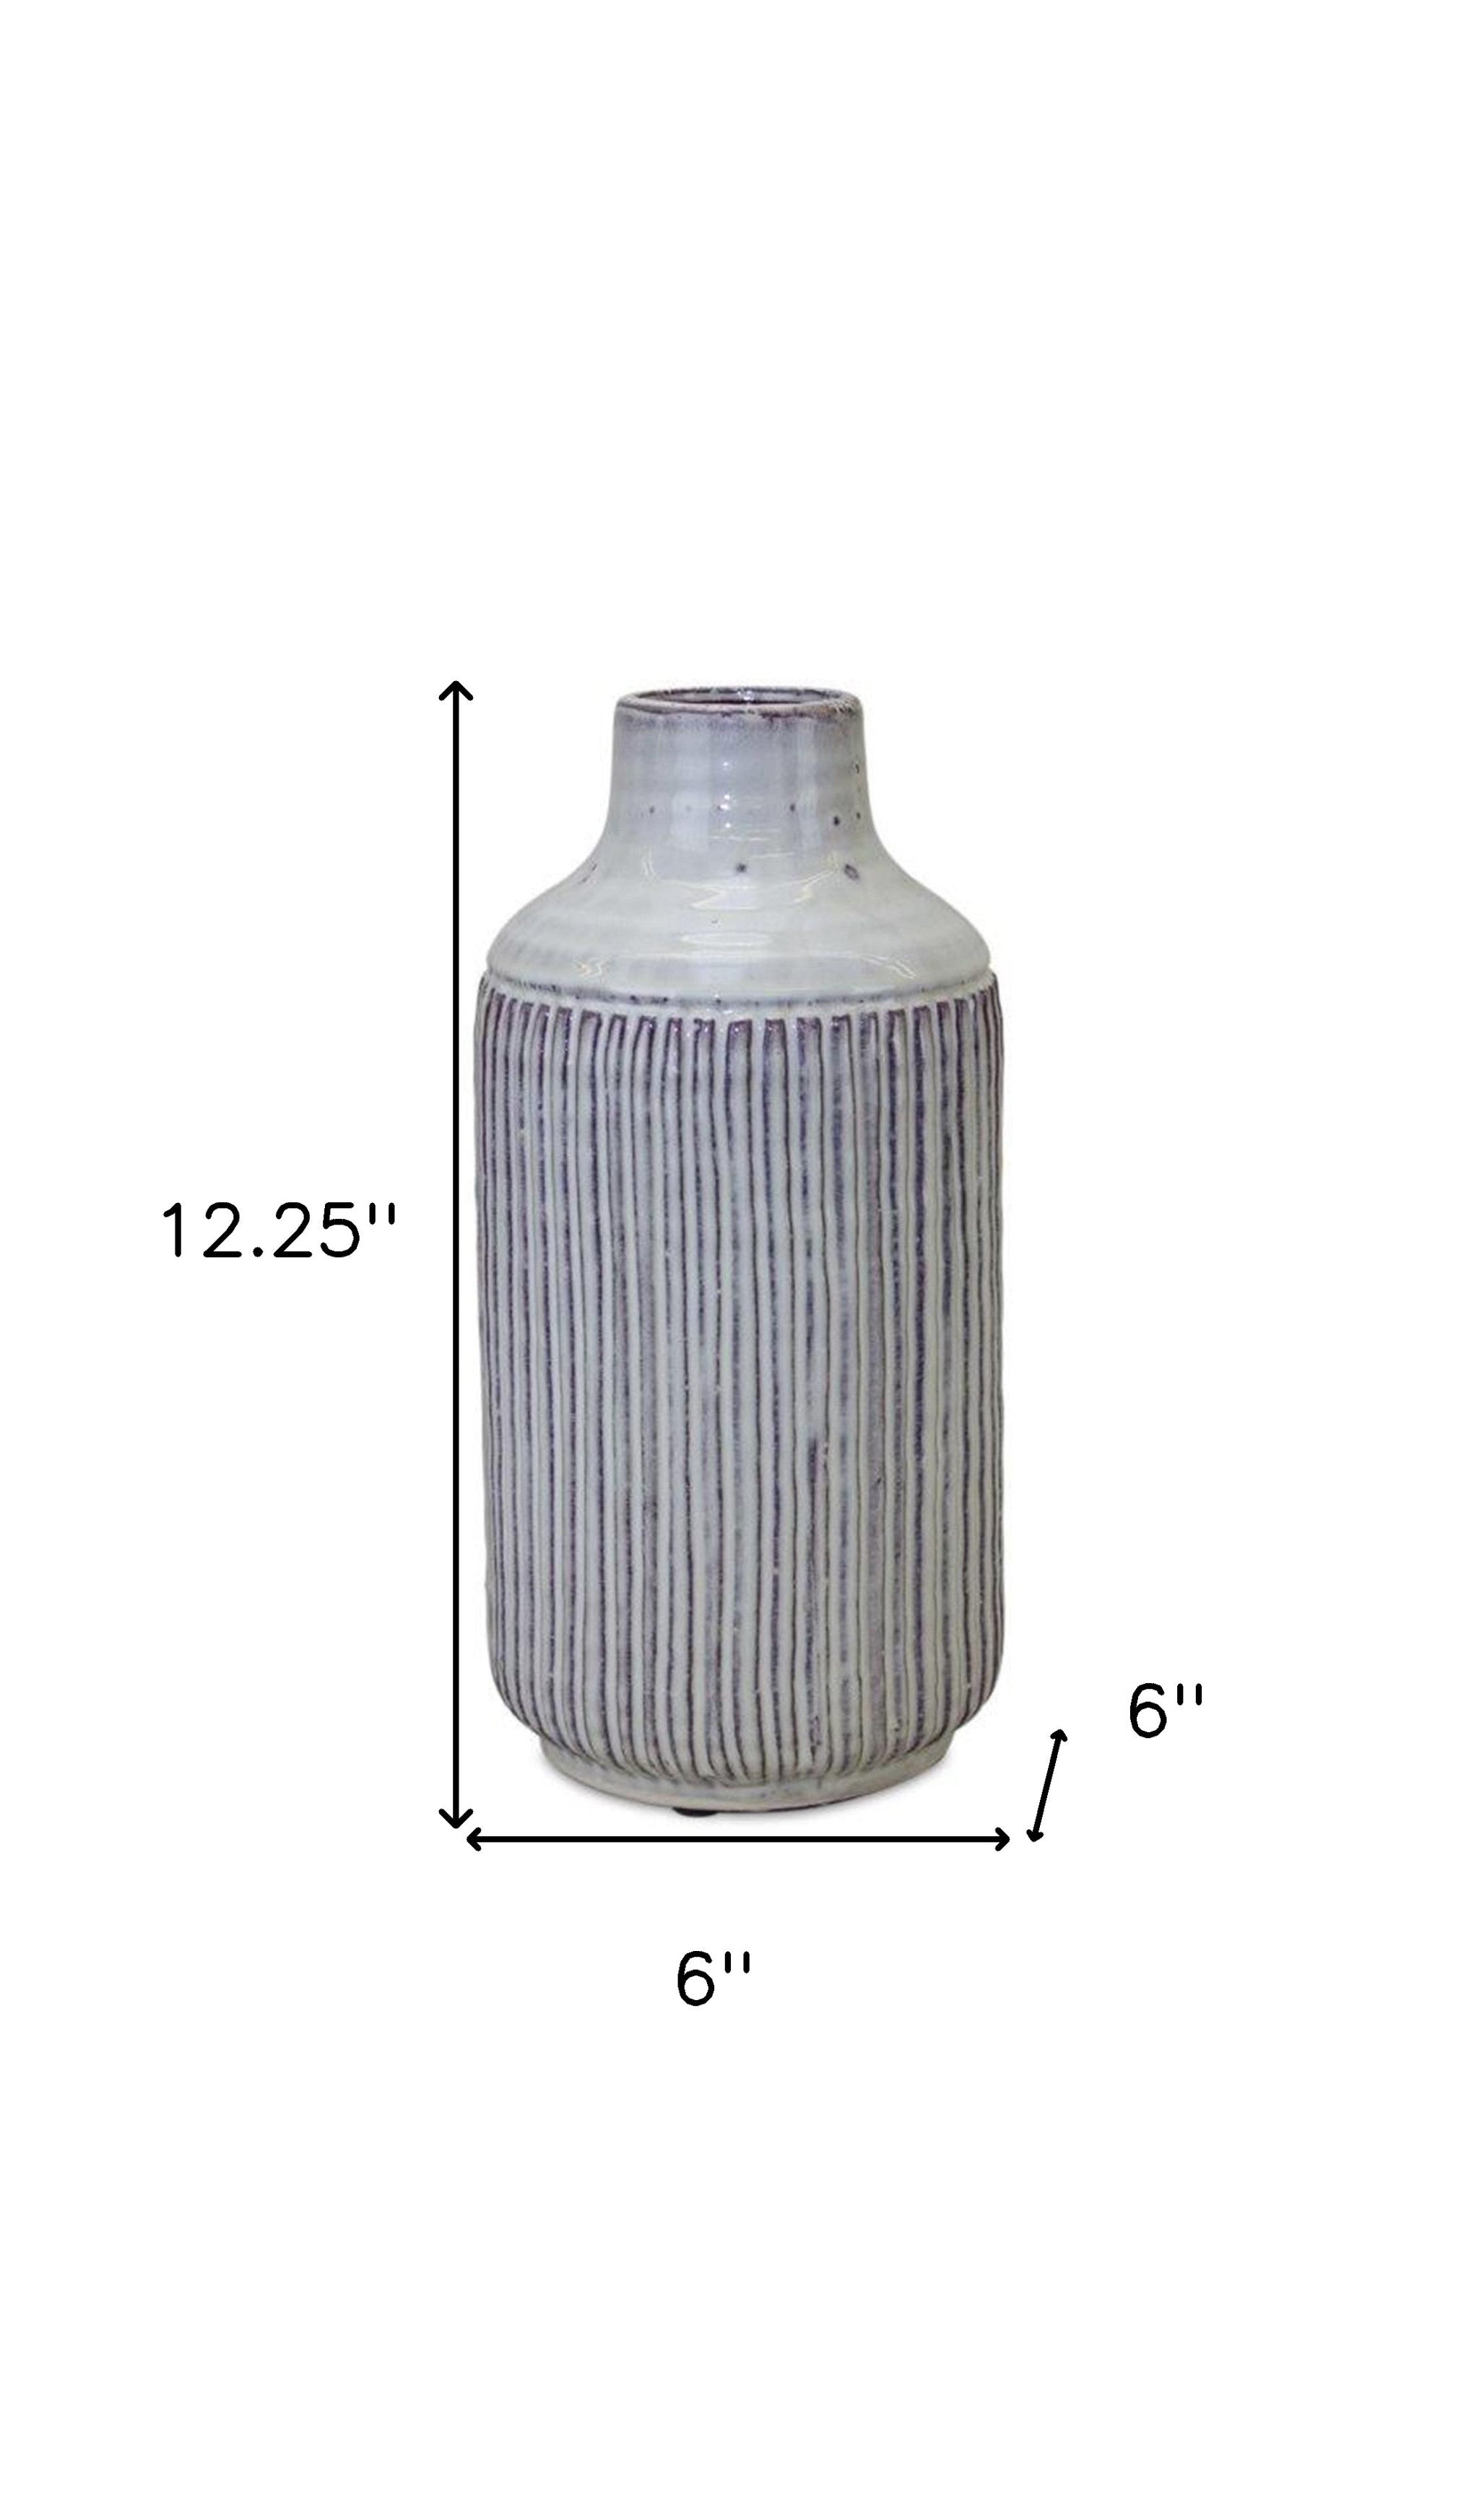 12.25" Terracotta Beige Round Table vase